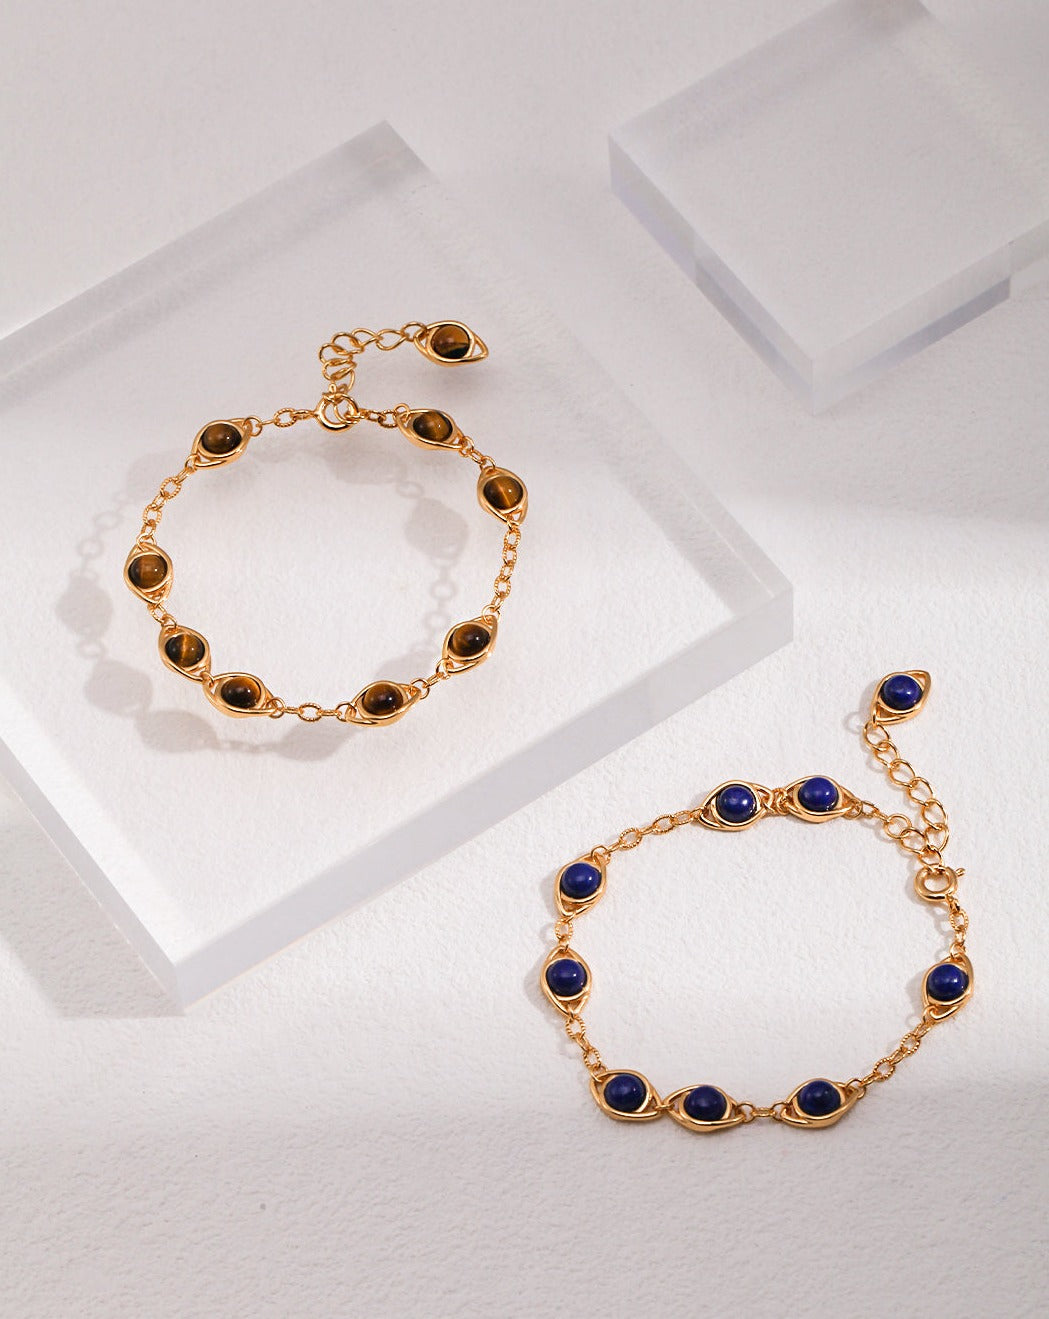 fashion-jewelry-minimalist-jewelry-design-jewelry-set-necklace-pearl-earring-gold-coated-silver-bijoux-lazurite-tiger-eye-bracelets